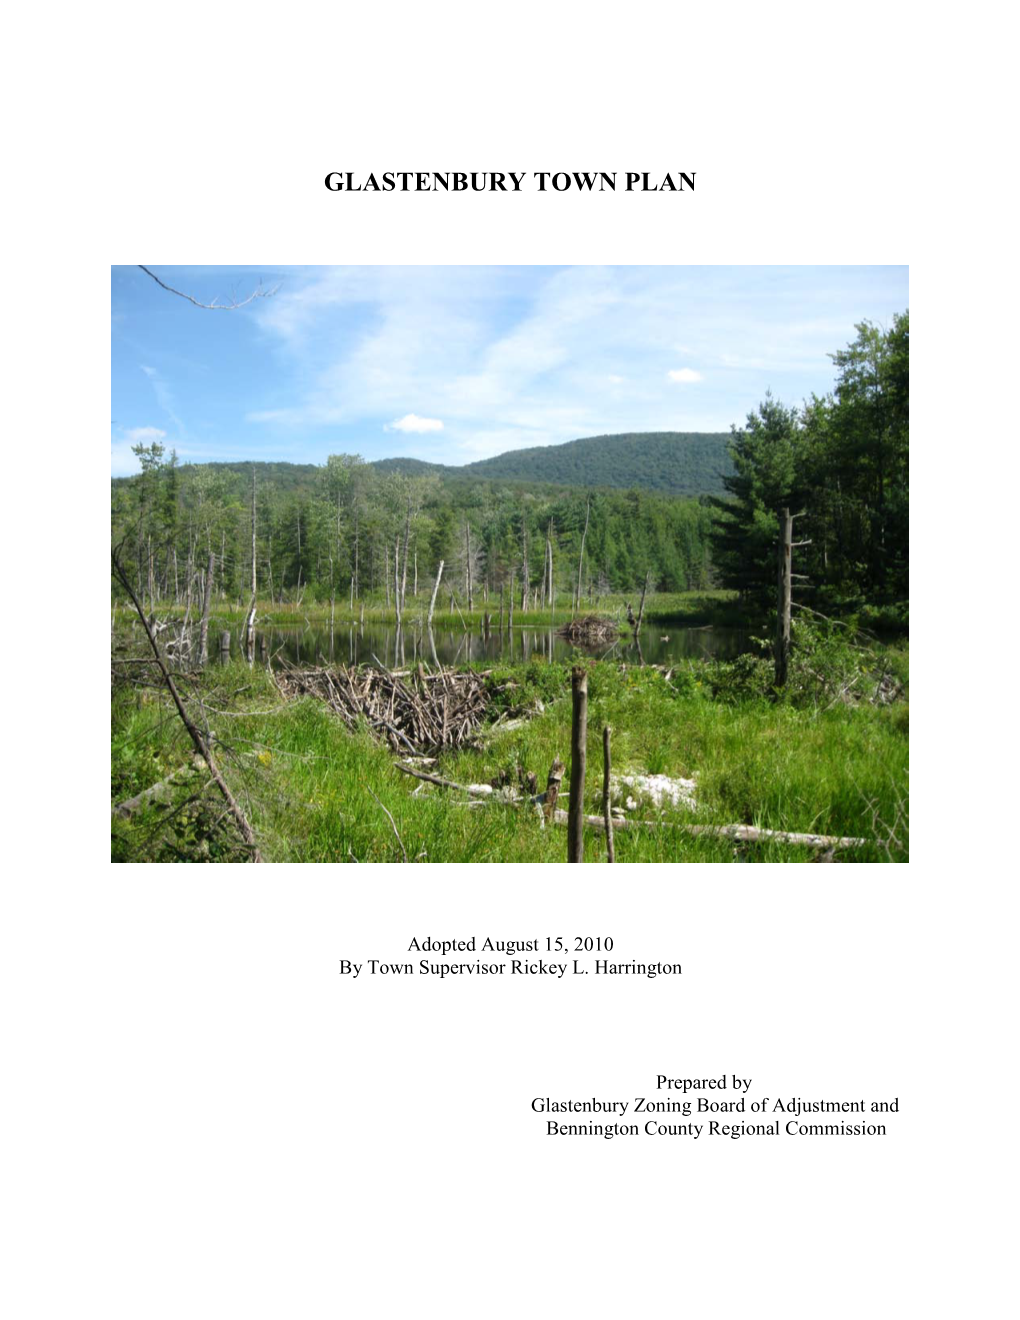 Glastenbury Town Plan